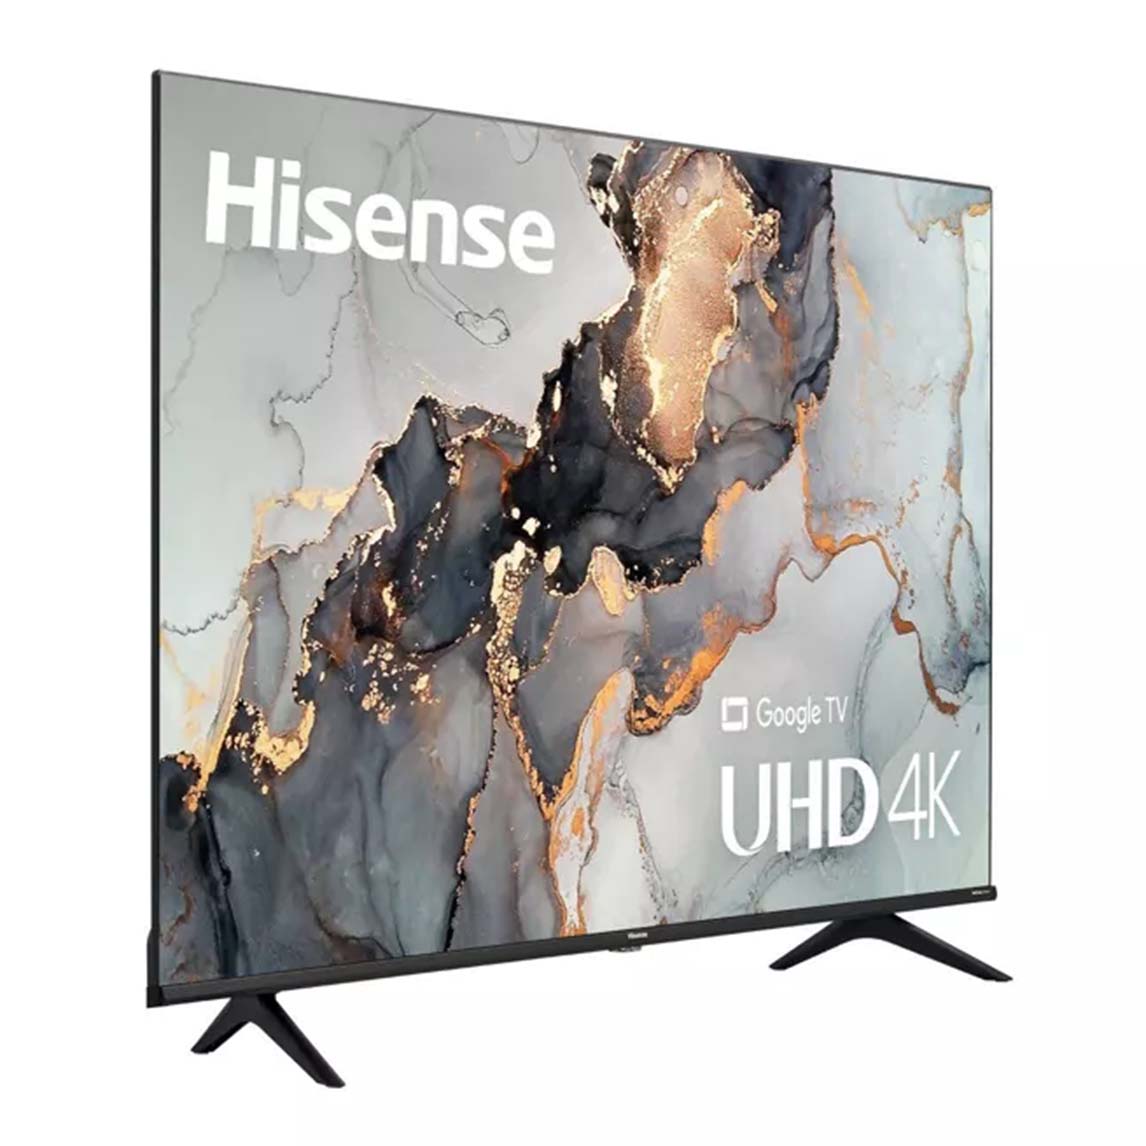 diagonal view of hisense uhd 4k tv on feet stands